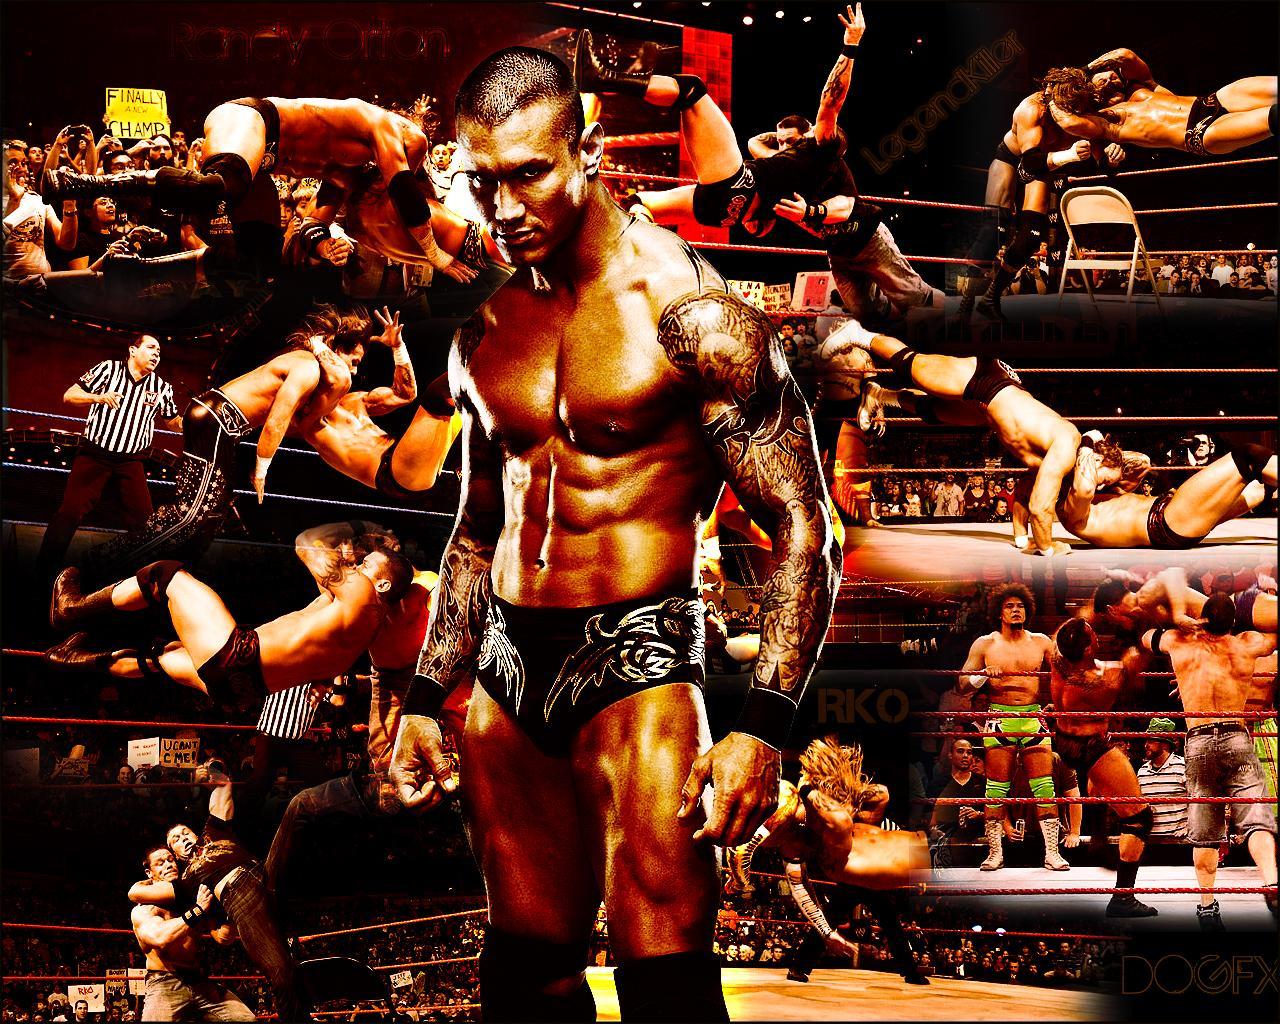 Wallpaper of Randy Orton Superstars, WWE Wallpaper, WWE PPV's